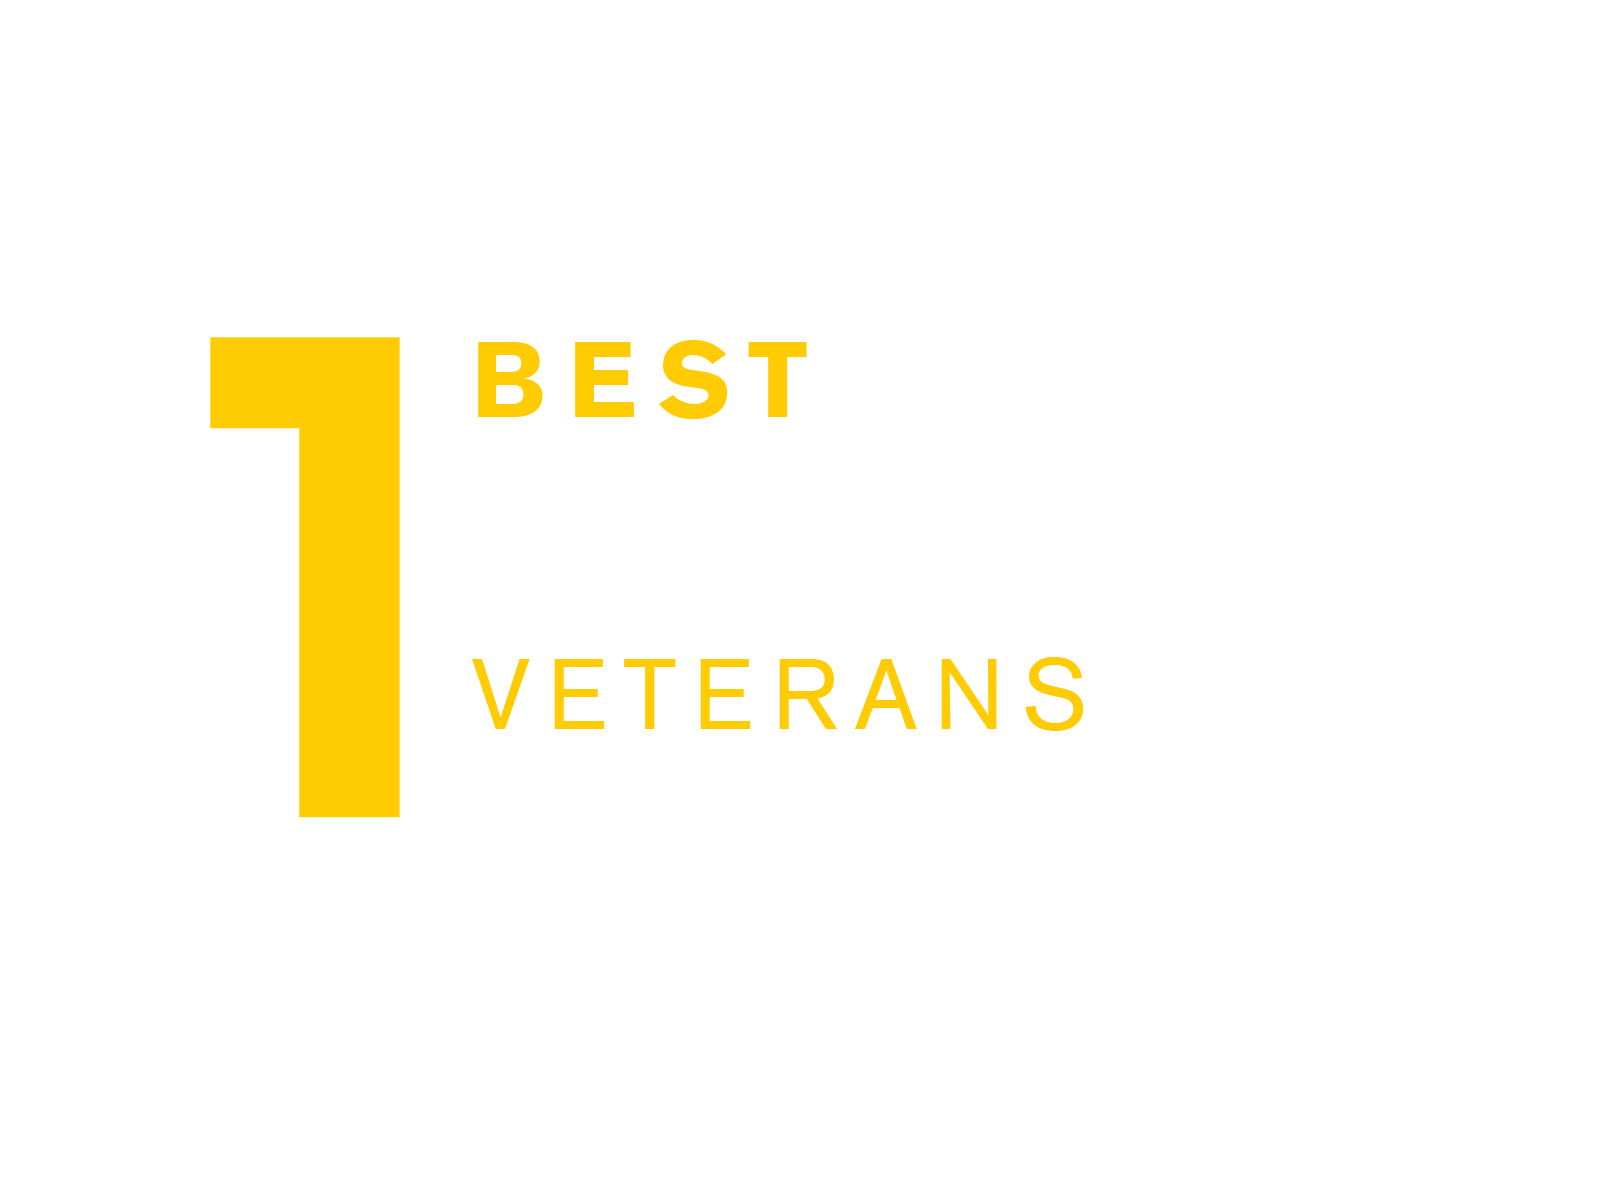 #1 - Best Colleges, Veterans, West Region, Prescott Campus